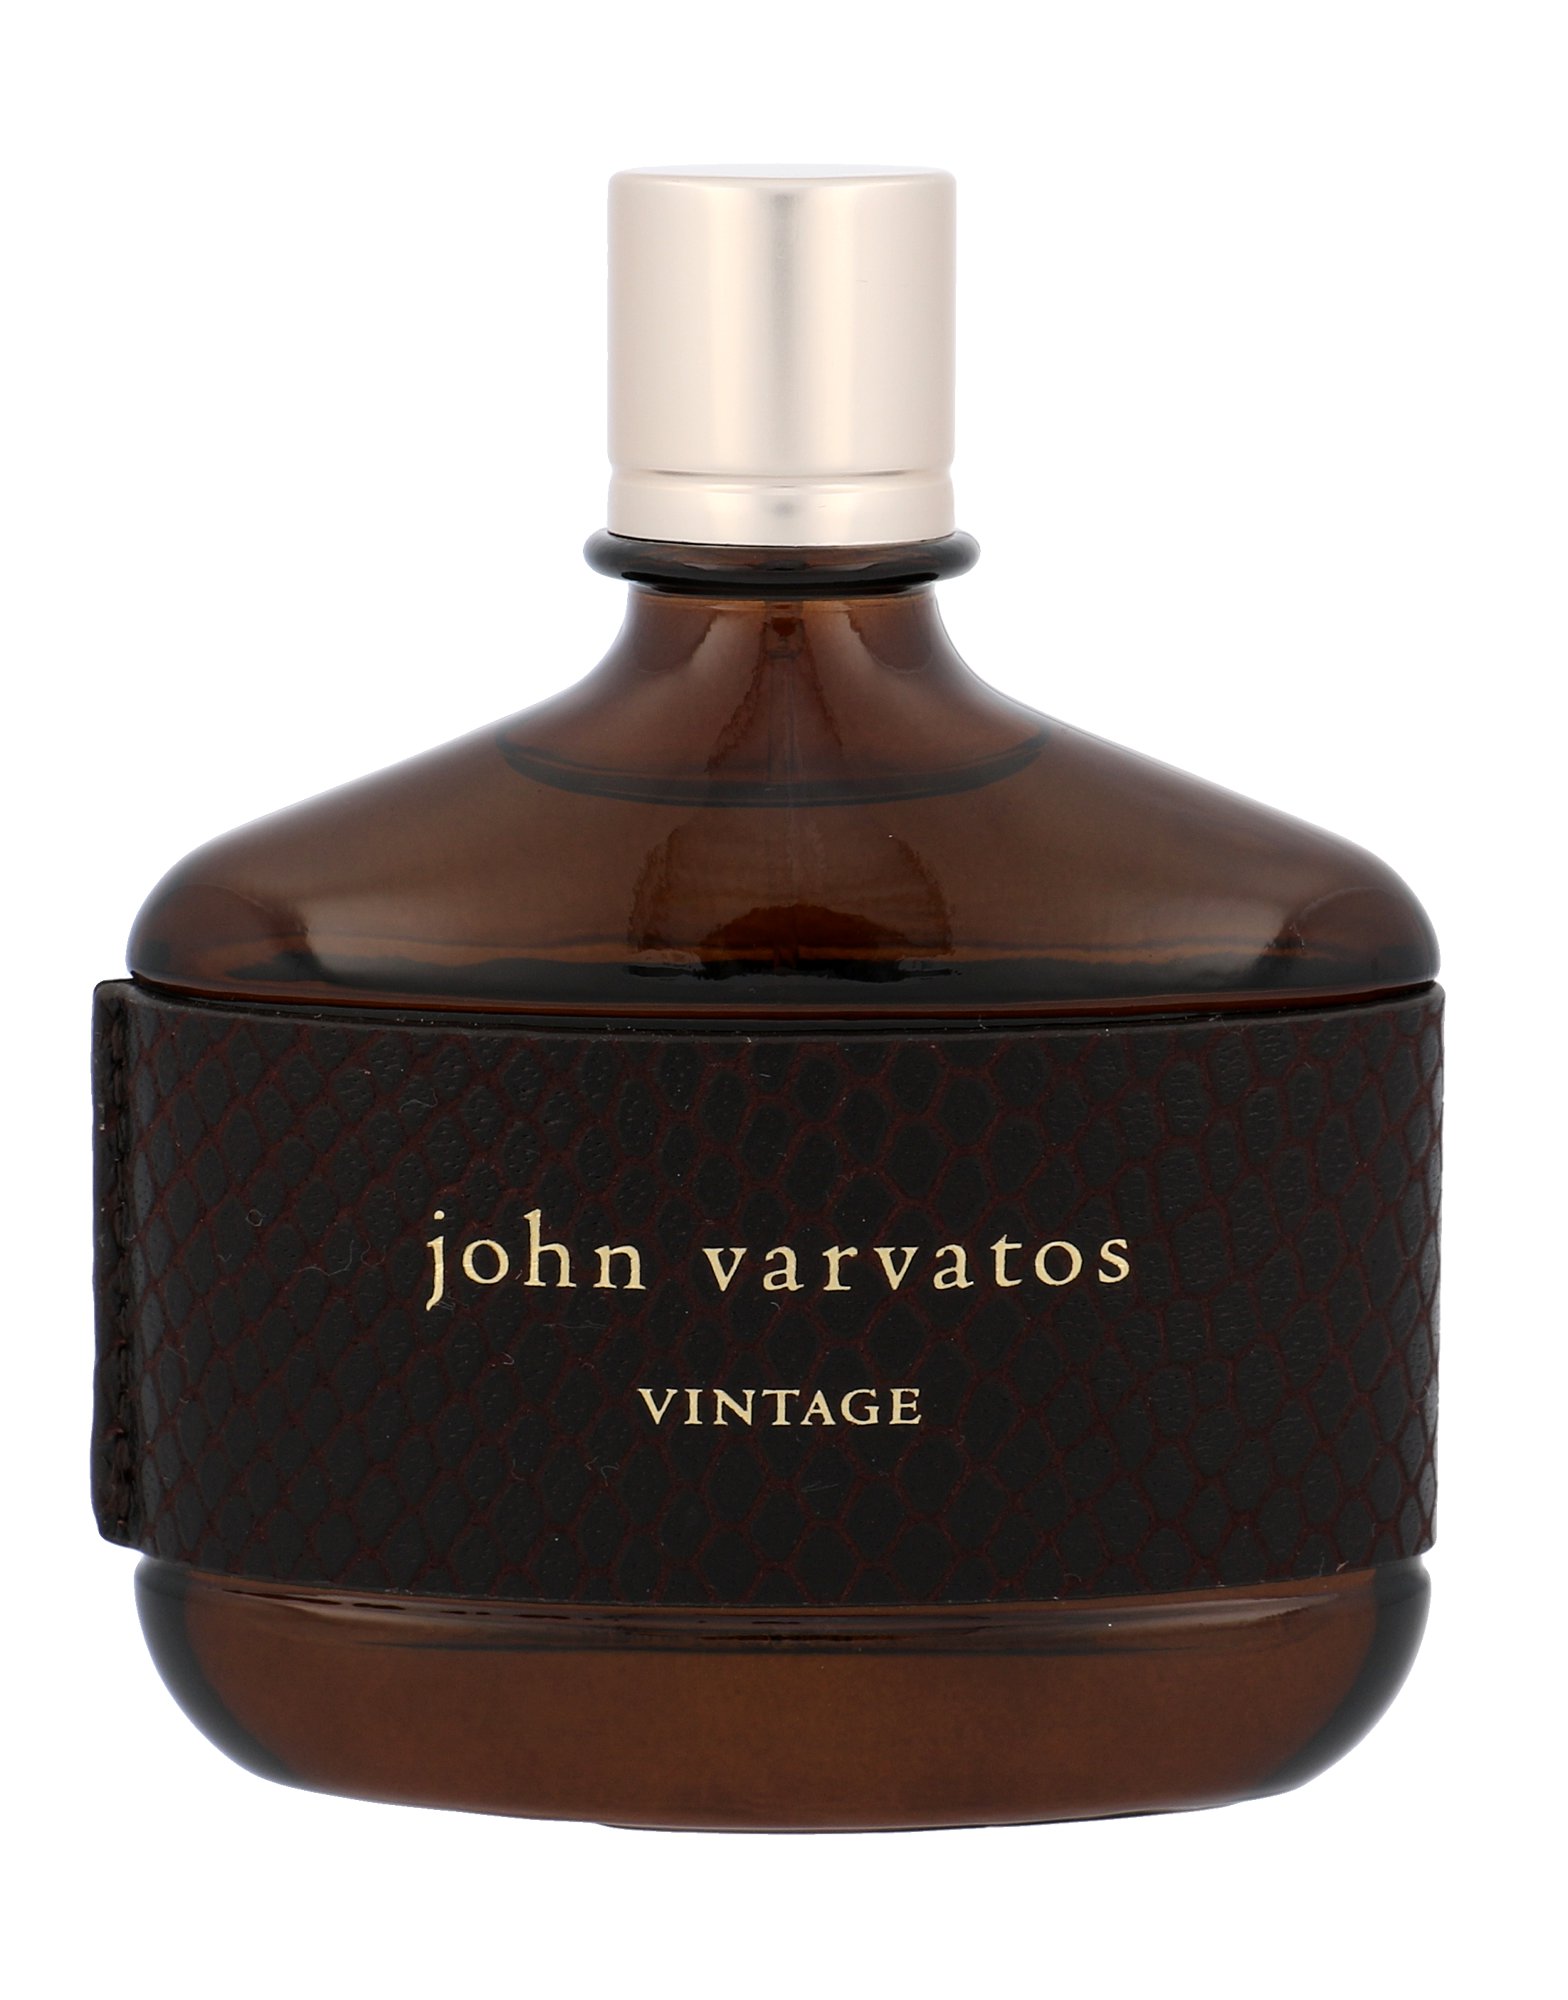 John Varvatos Vintage, EDT 75ml